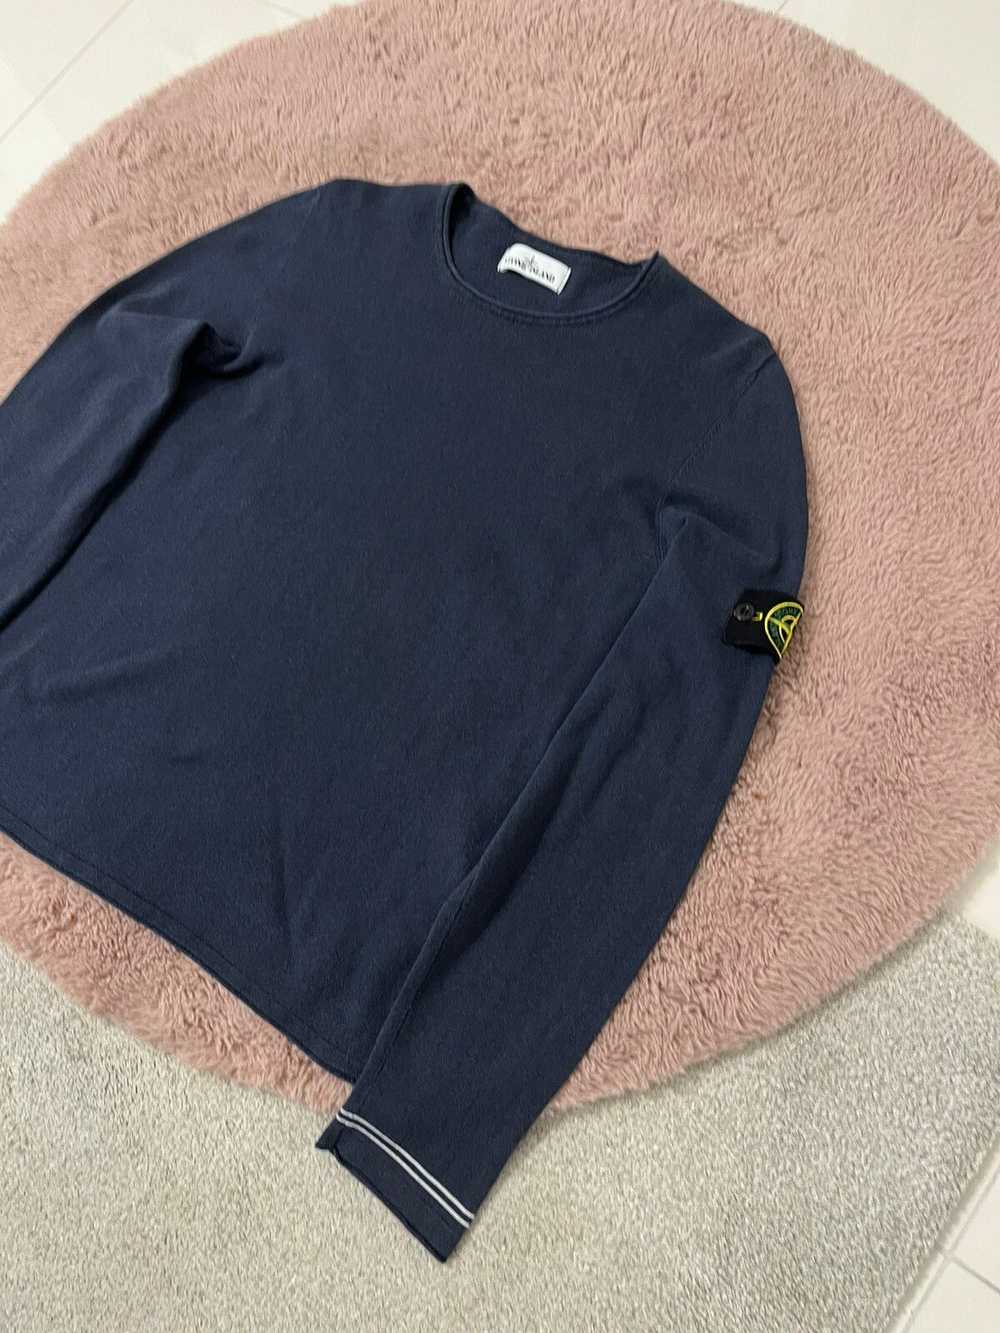 Stone Island stone Island garment dyed sweater (M) - image 1